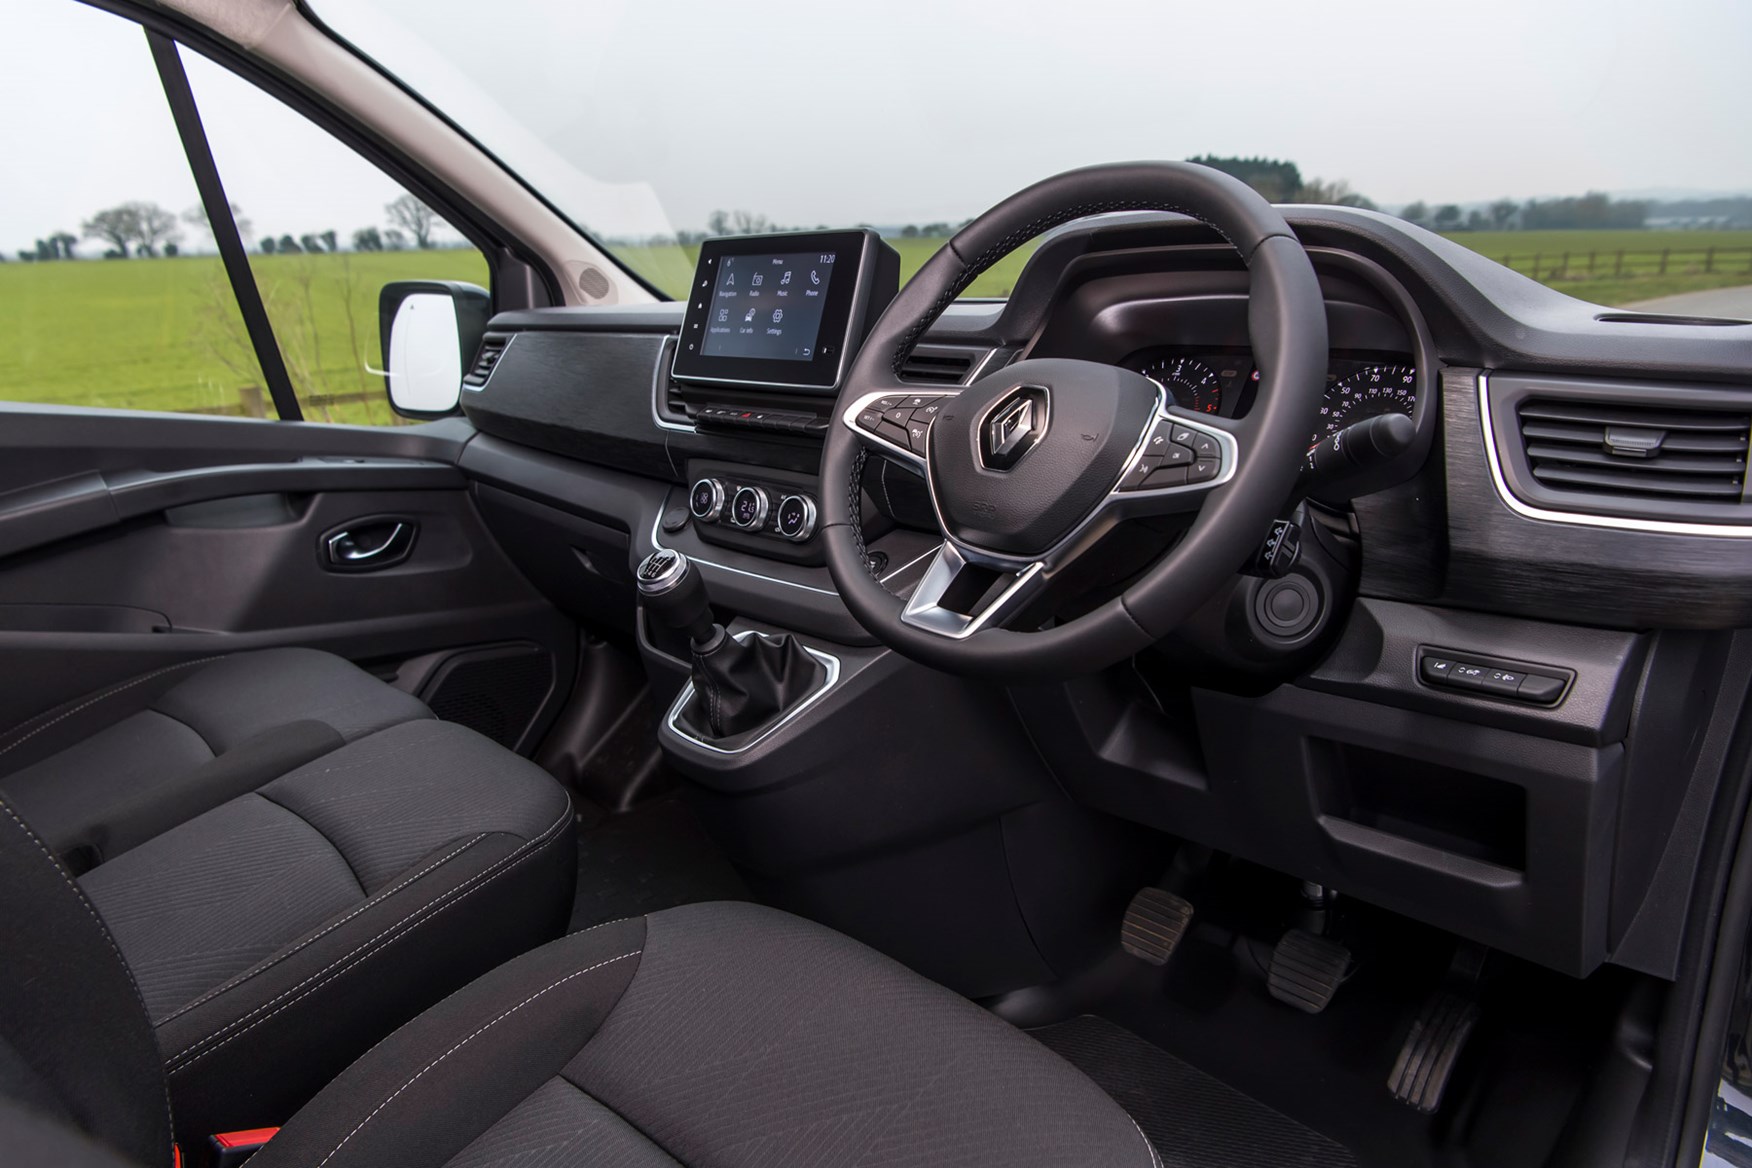 Renault Trafic van review - 2022 facelift model, cab interior, dashboard